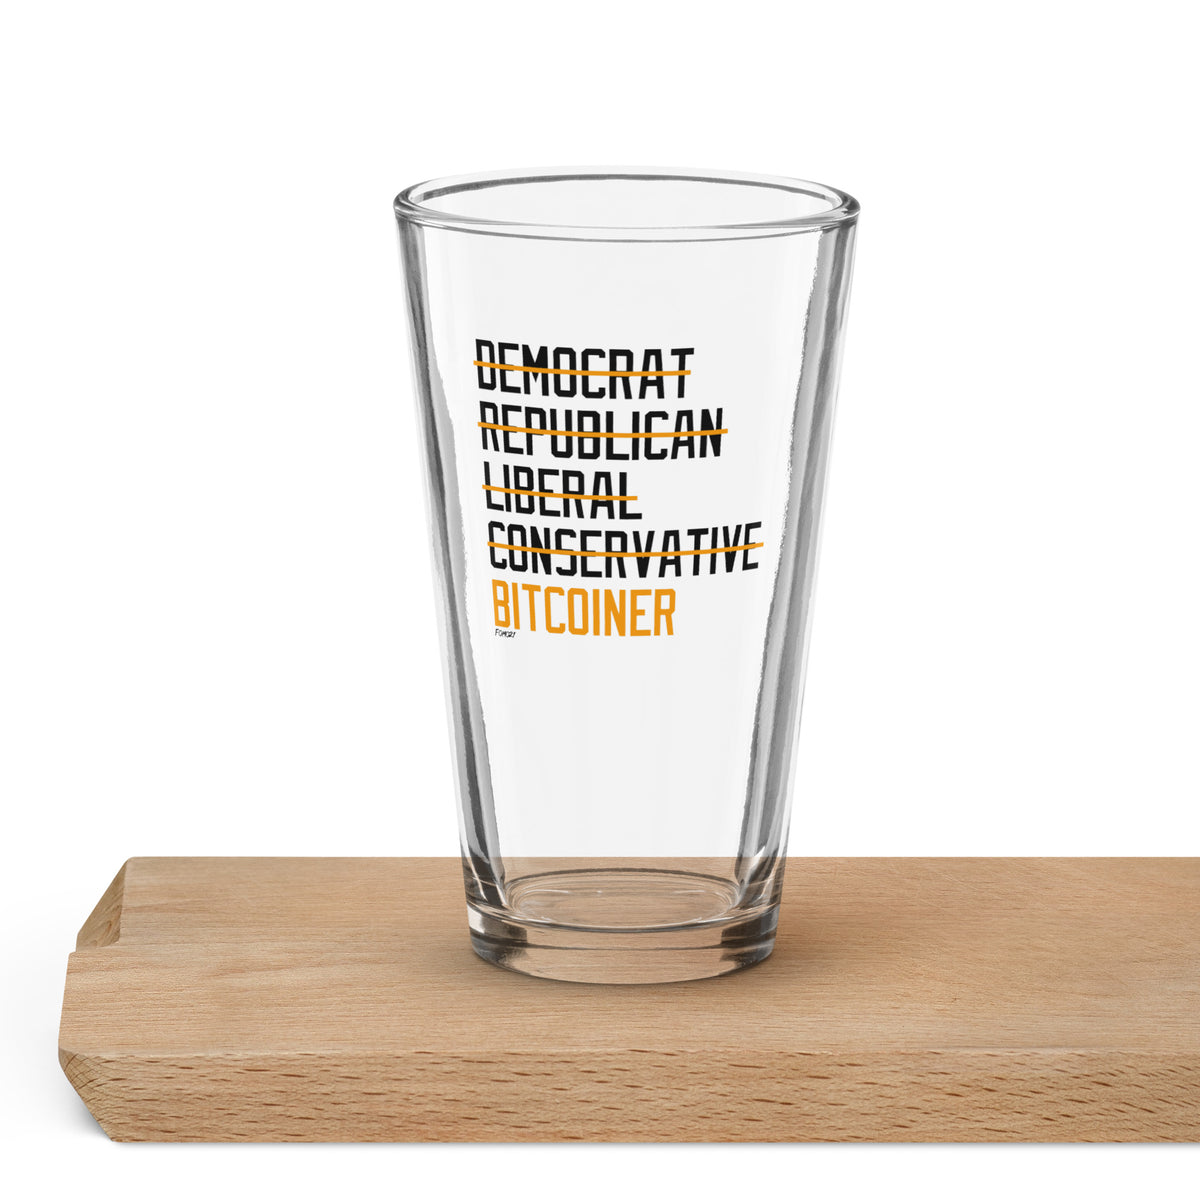 Democrat Republican Conservative Liberal Bitcoiner Bitcoin Pint Glass